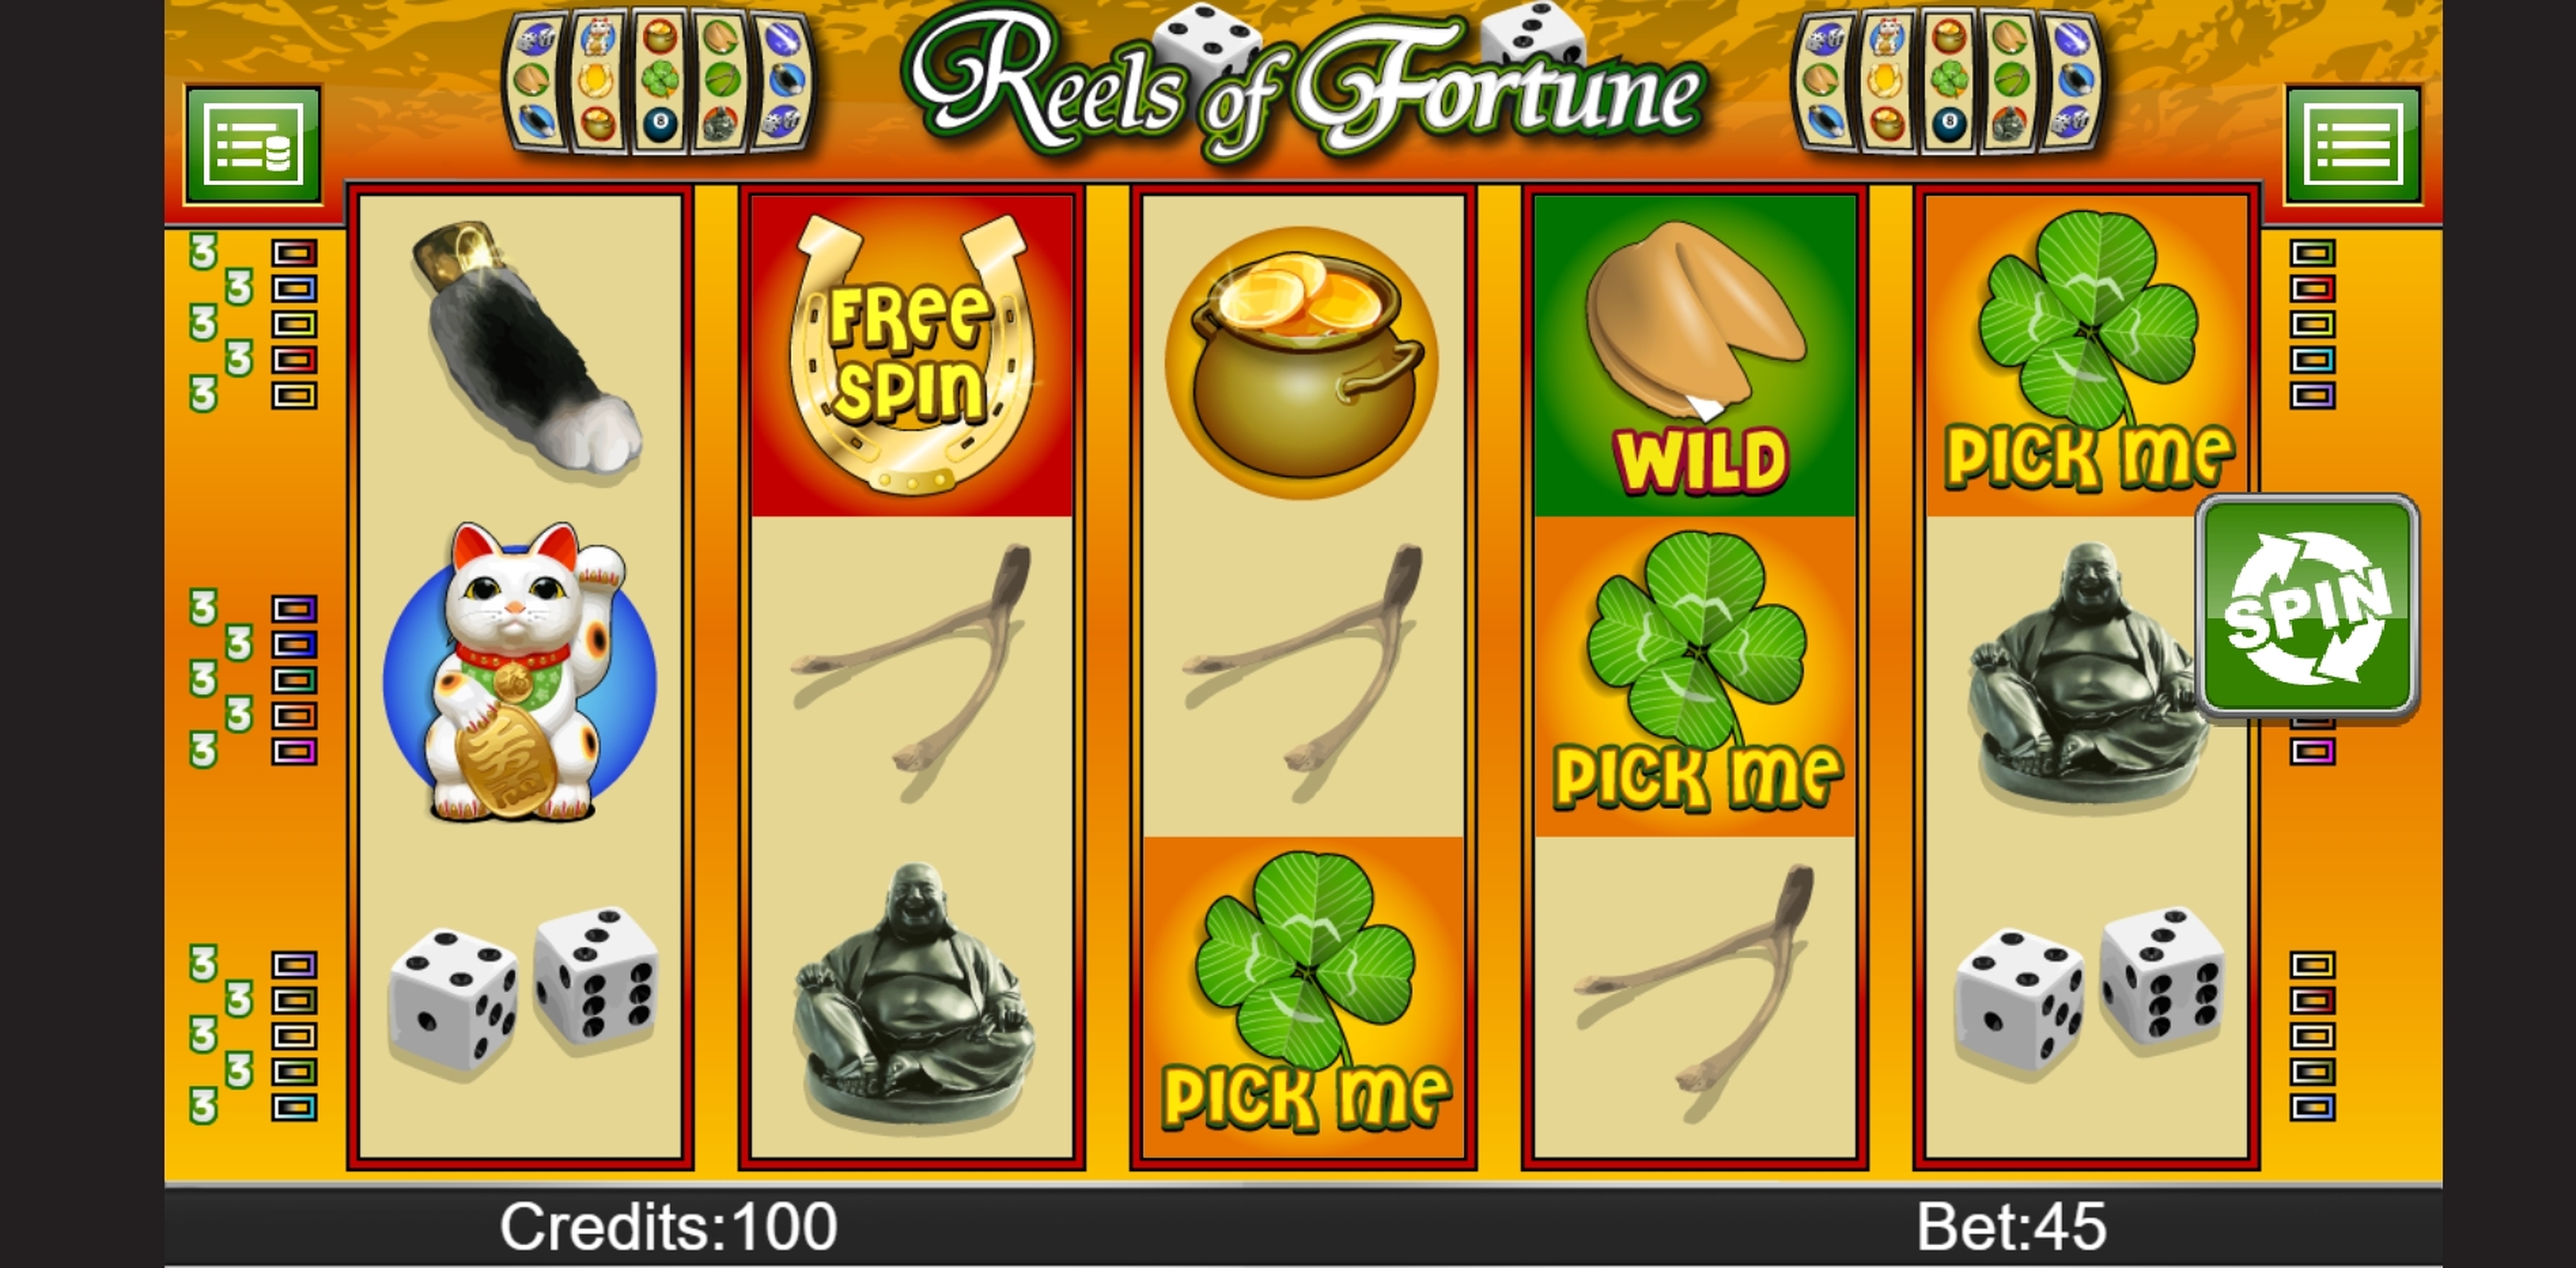 Reels of Fortune demo